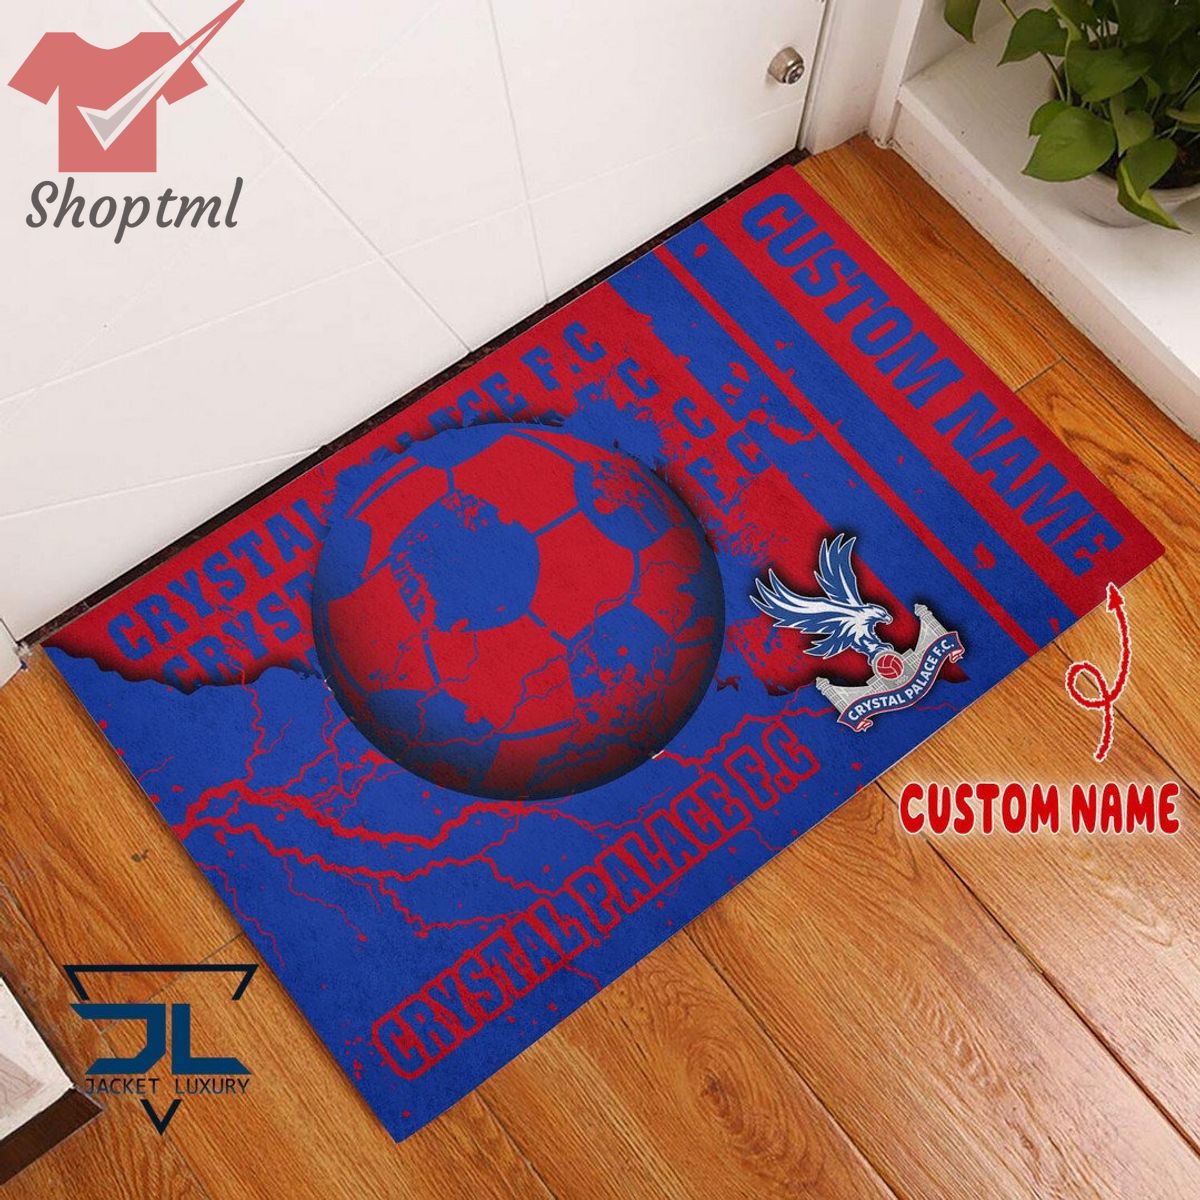 Crystal Palace F.C Custom Name Doormat